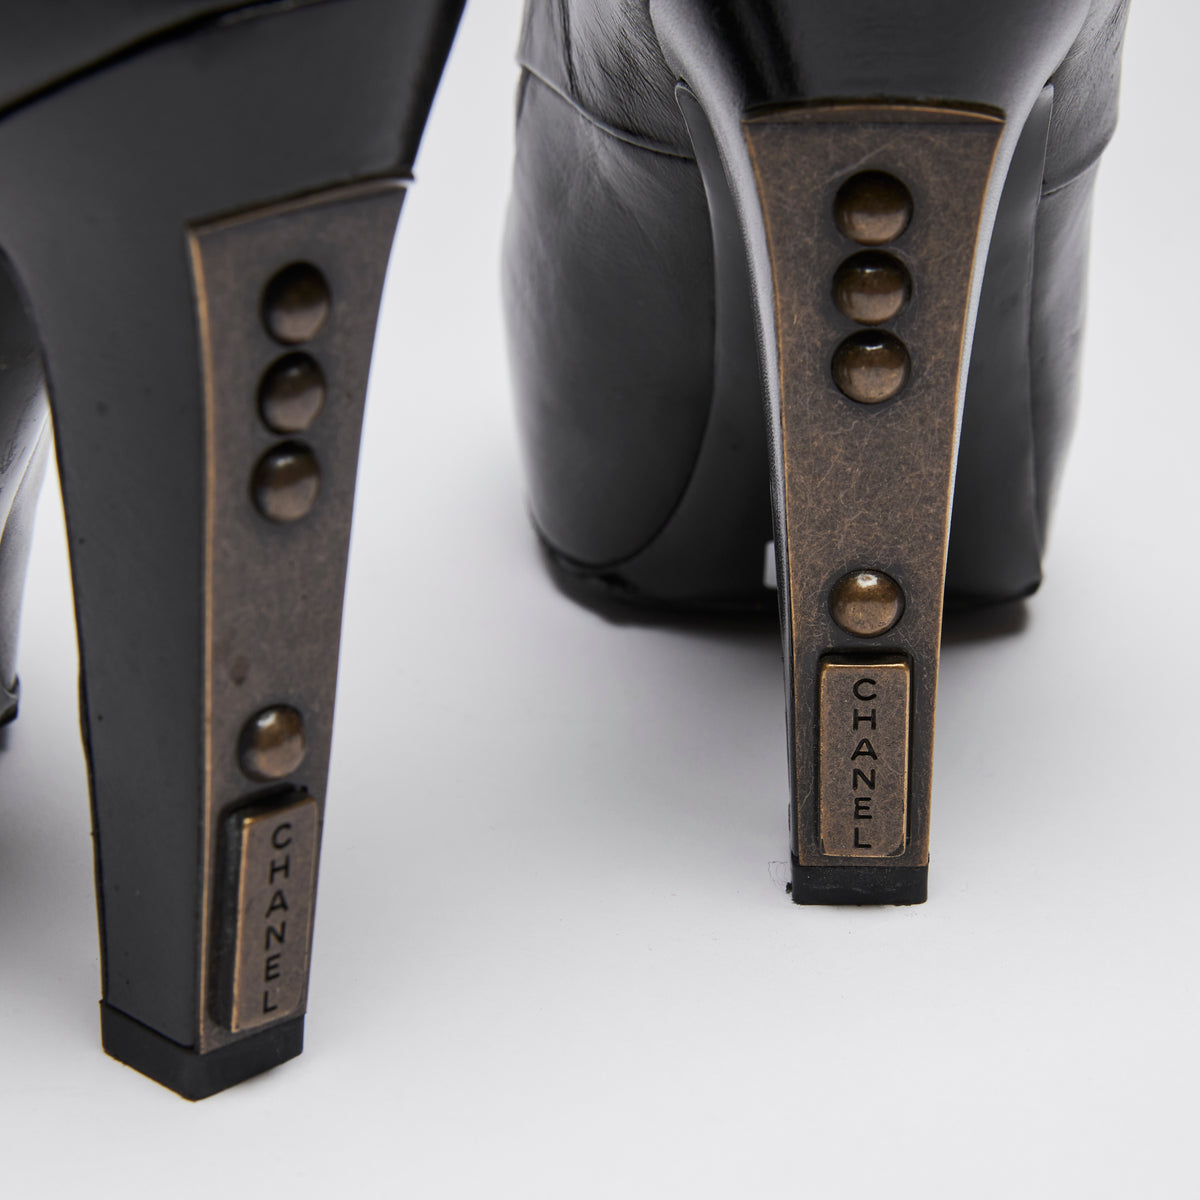 Pre-Loved Black Leather Lace Up Platform High Heel Boots.(close up)